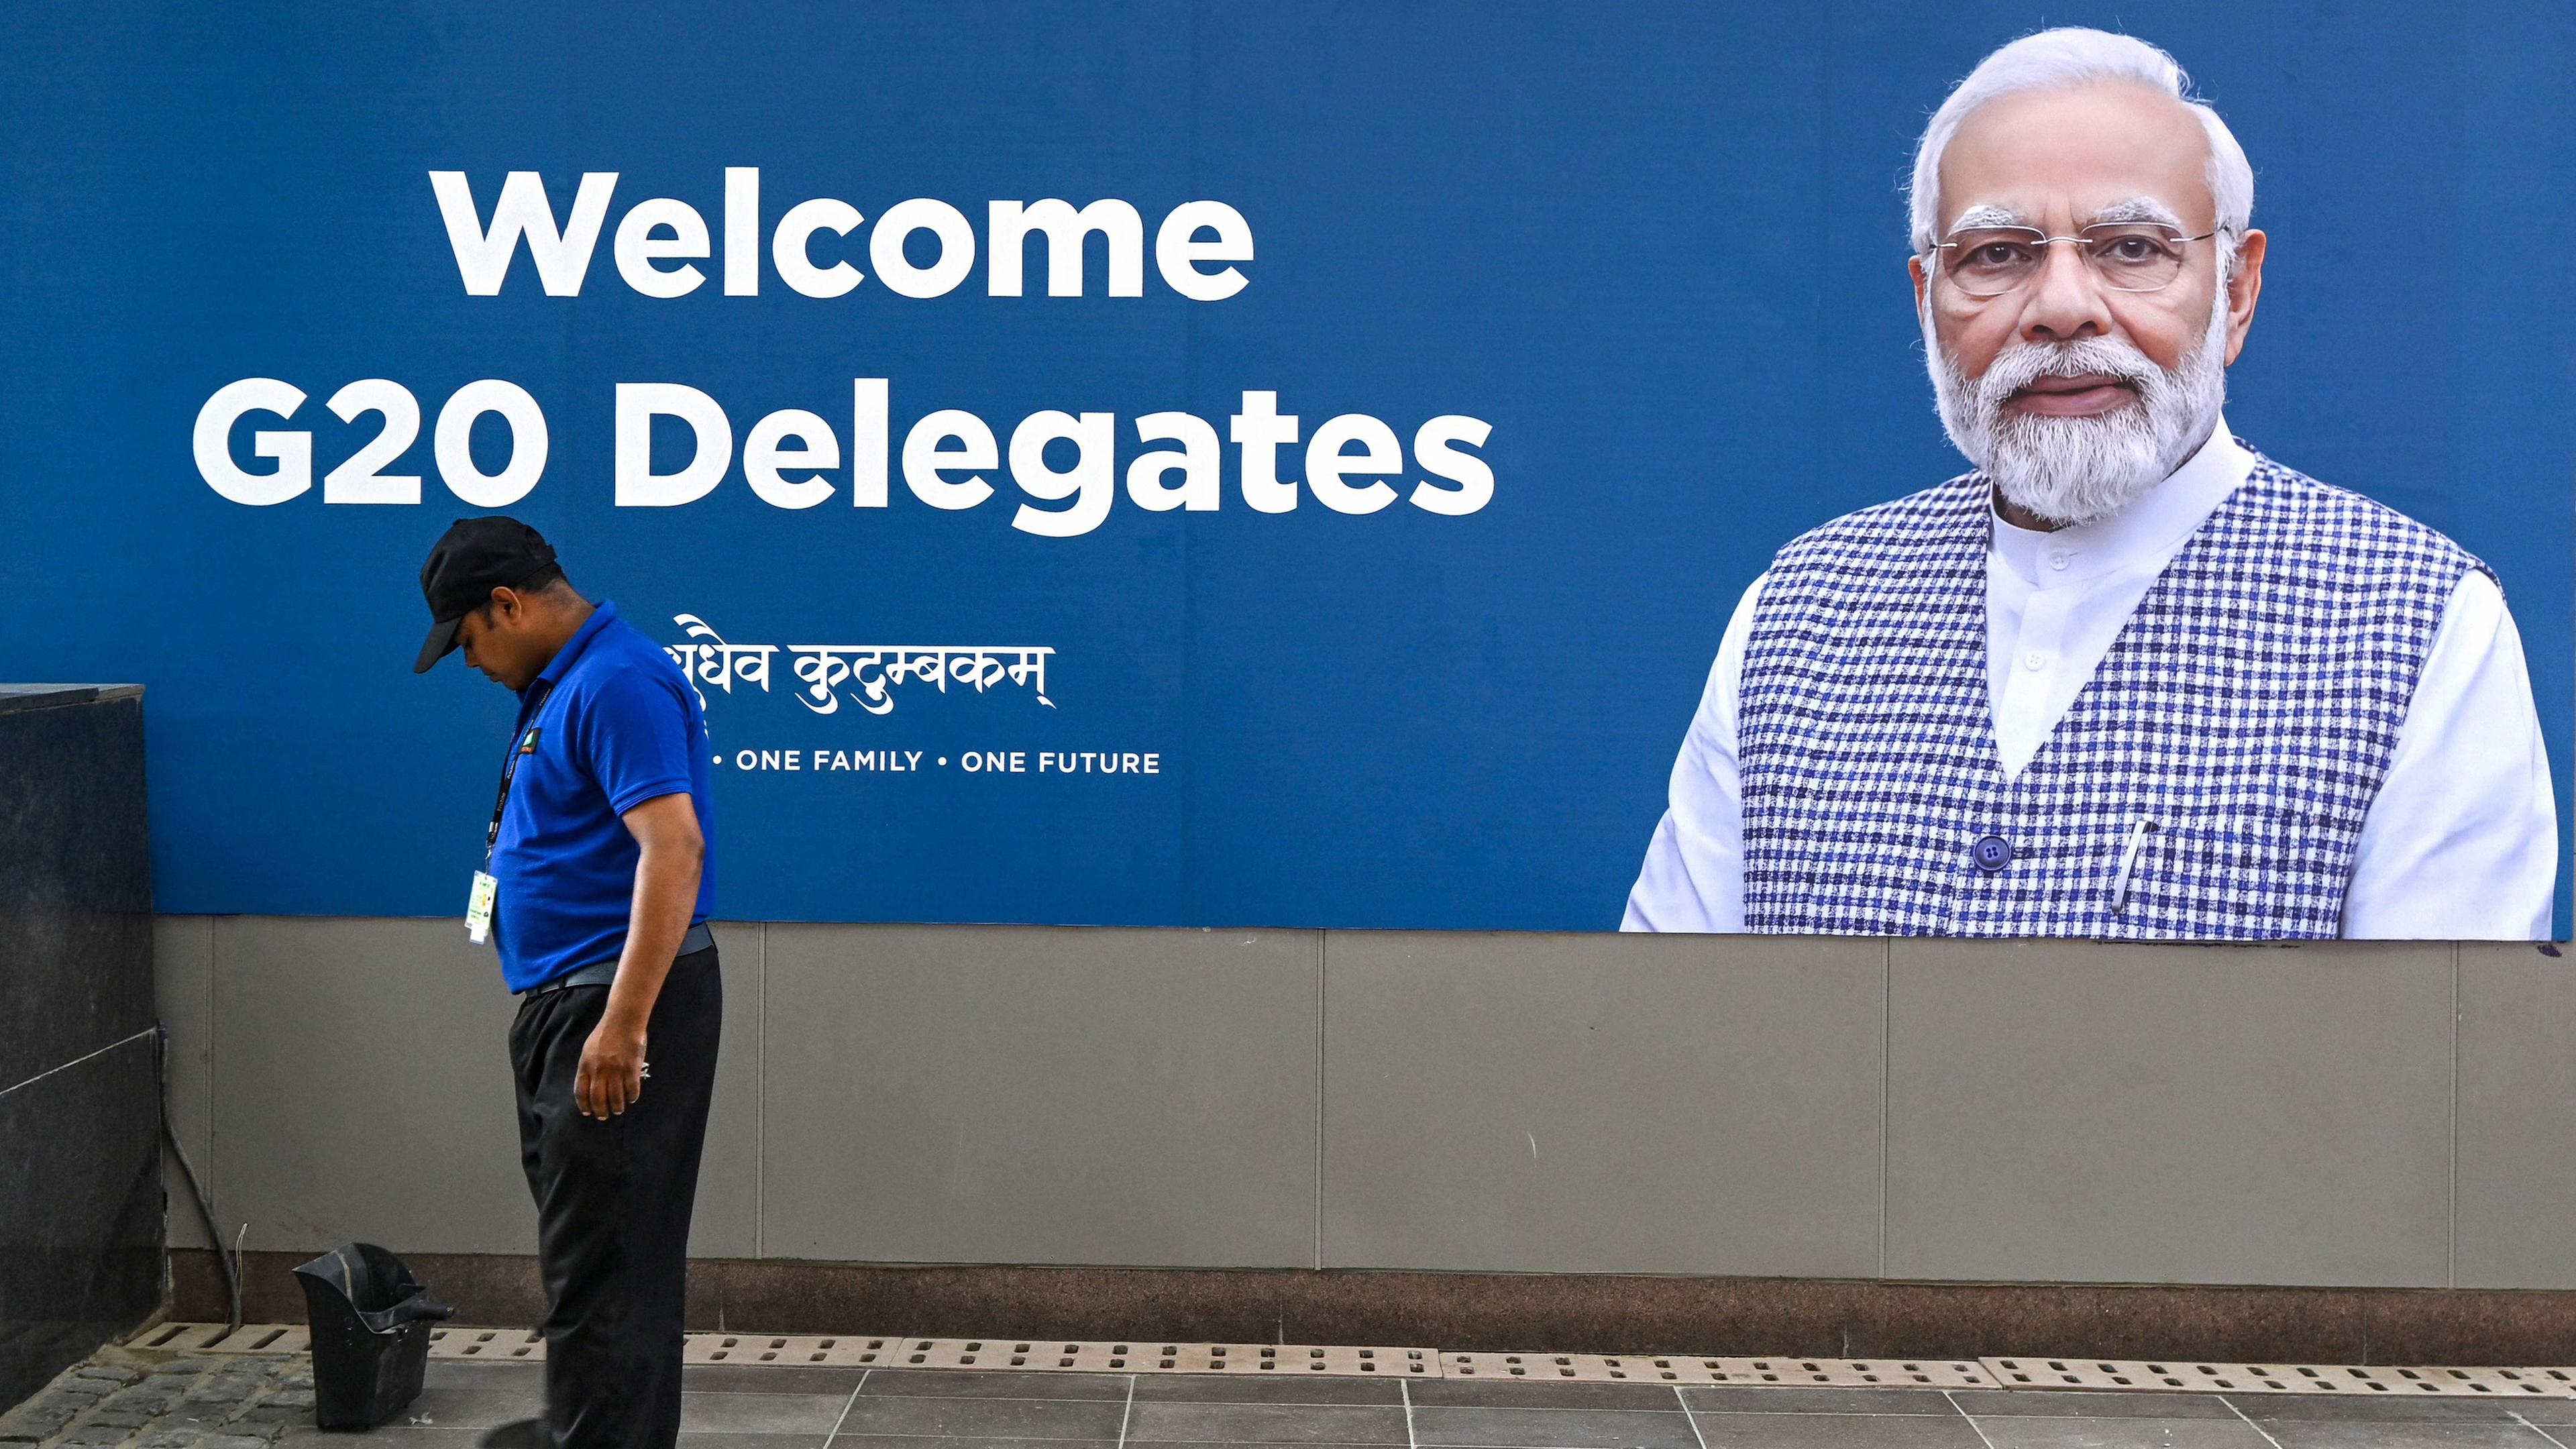 Plakat mit Indiens Premierminister Narendra Modi zum G20-Gipfel.